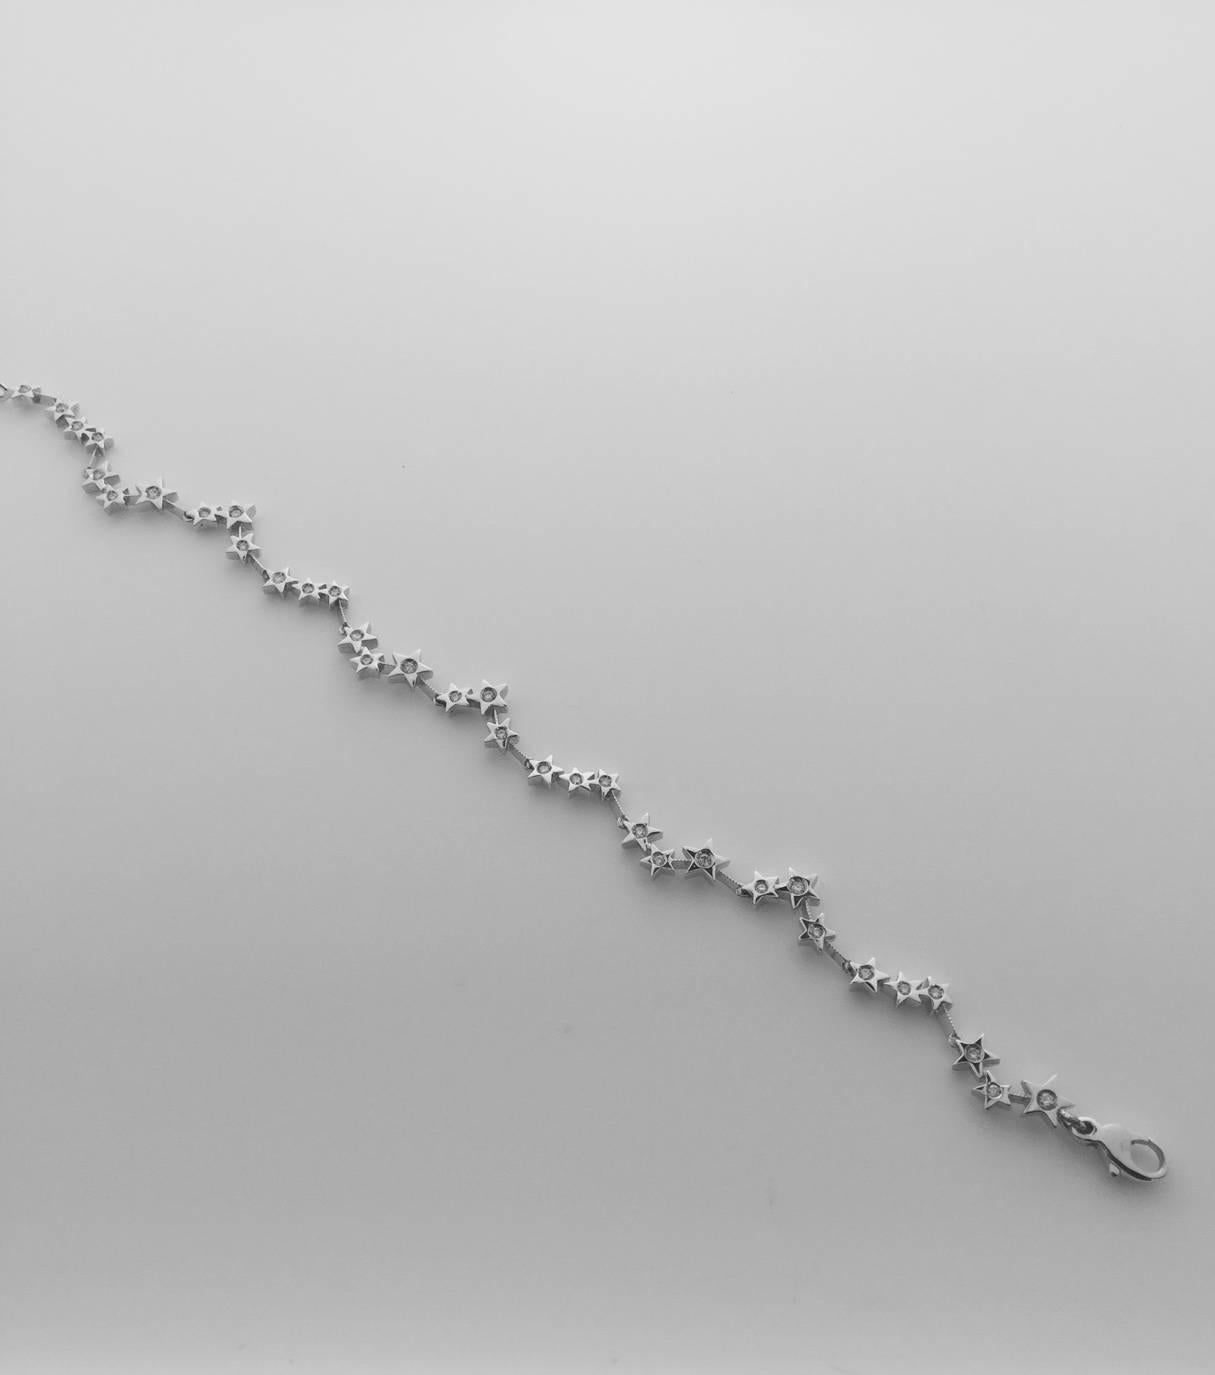 Whimsical 18k diamond bracelet containing 24 diamonds weighing combined 0.37 carat. 